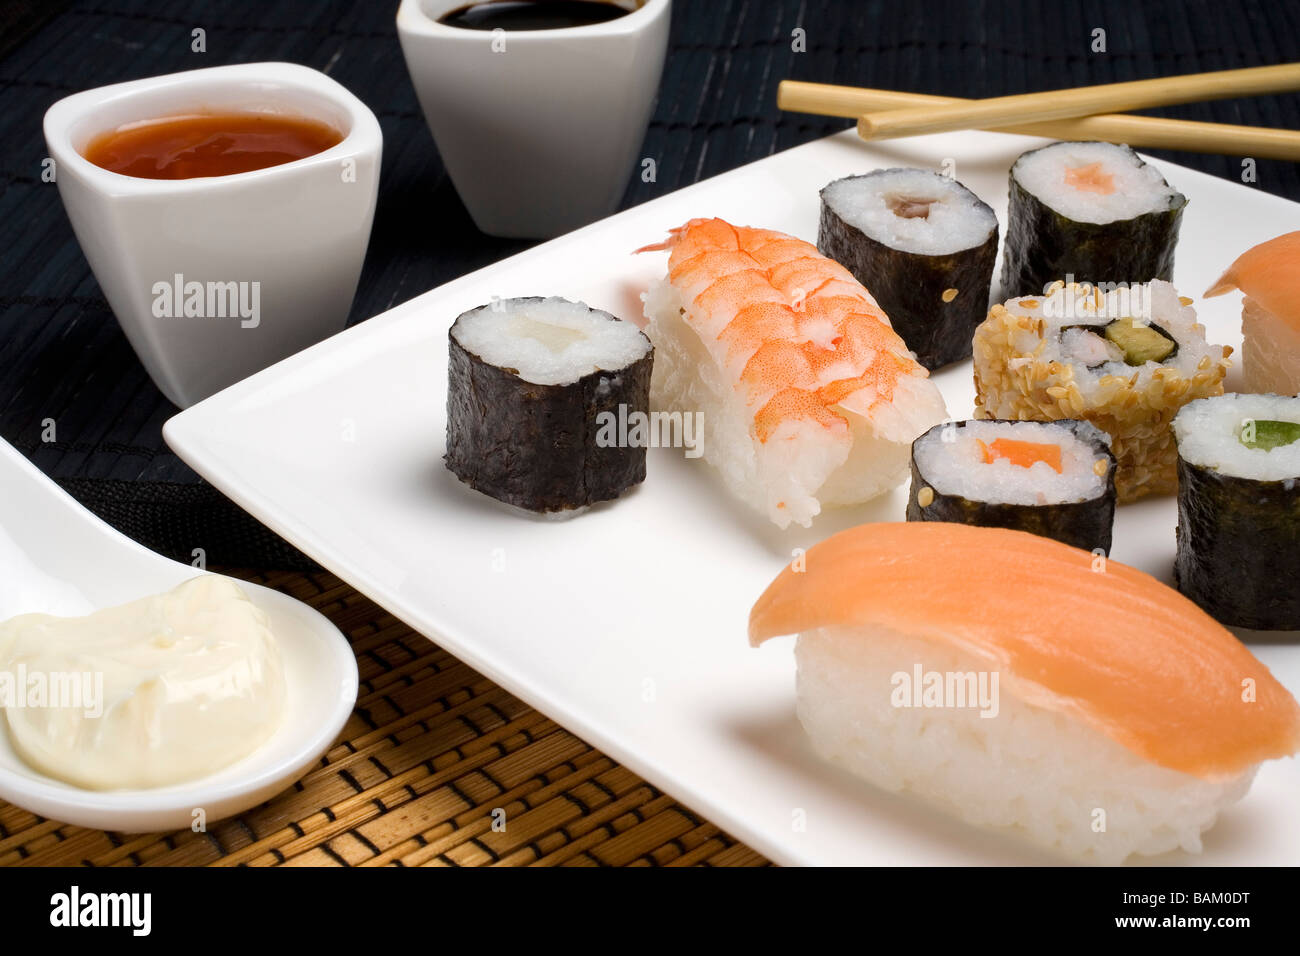 Sushi Plato Tìpico de la Gastronomía de Japón Sushi Traditional Dishes of Japanese Cuisine Stock Photo